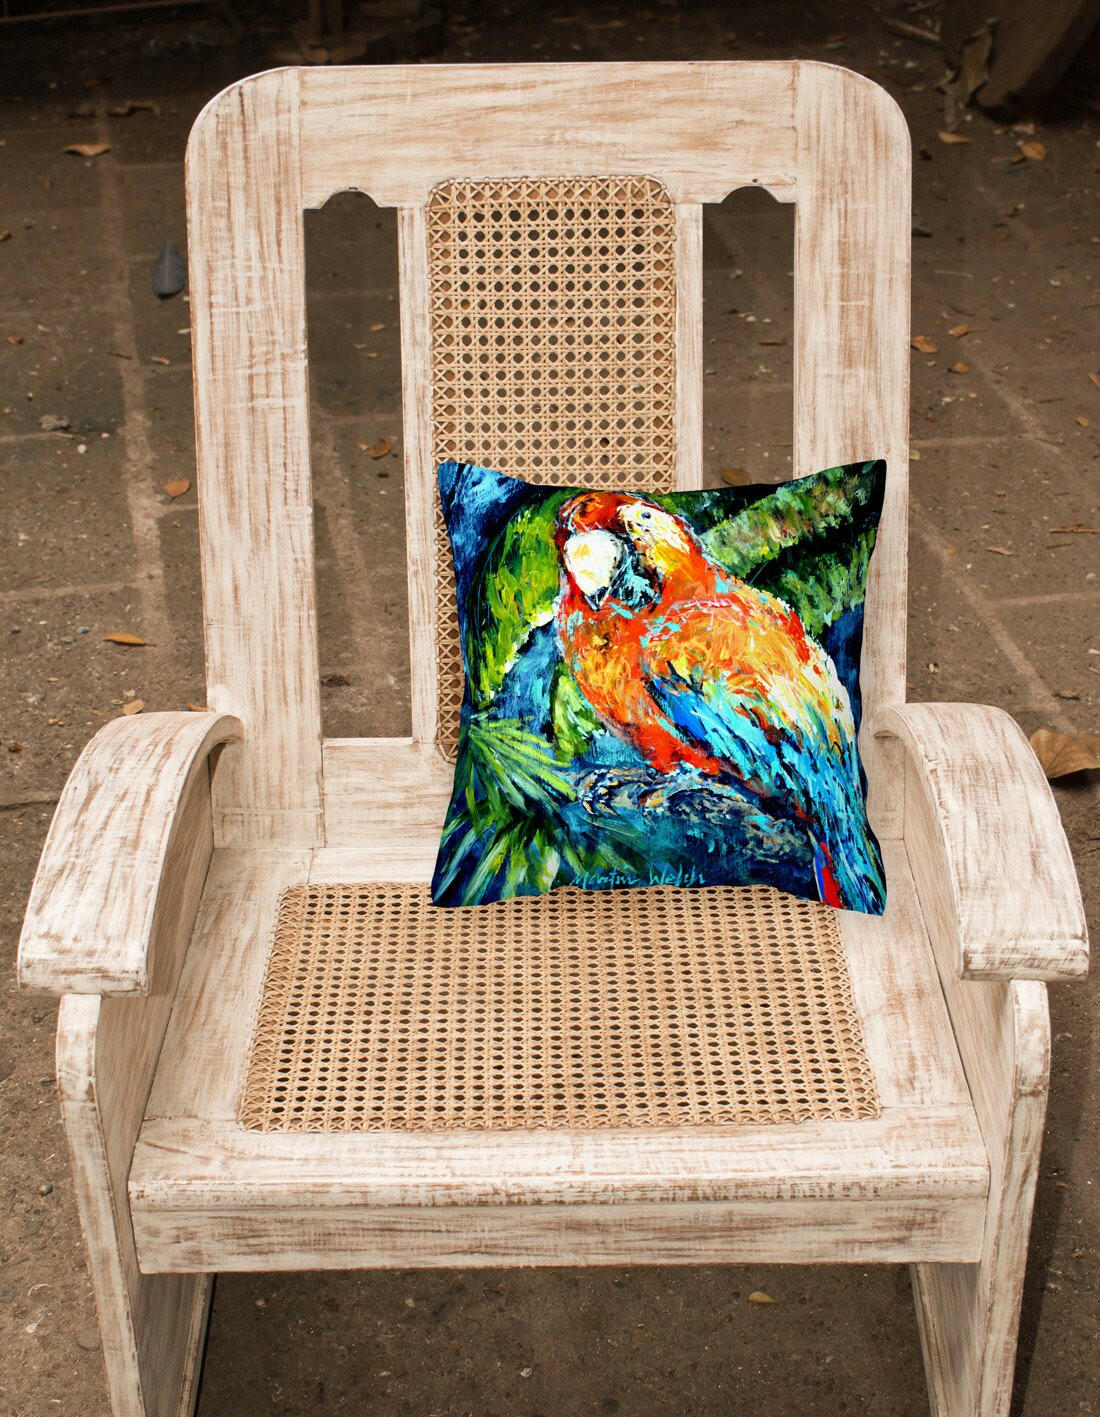 Yo Yo Mama Parrot Canvas Fabric Decorative Pillow MW1204PW1414 by Caroline's Treasures